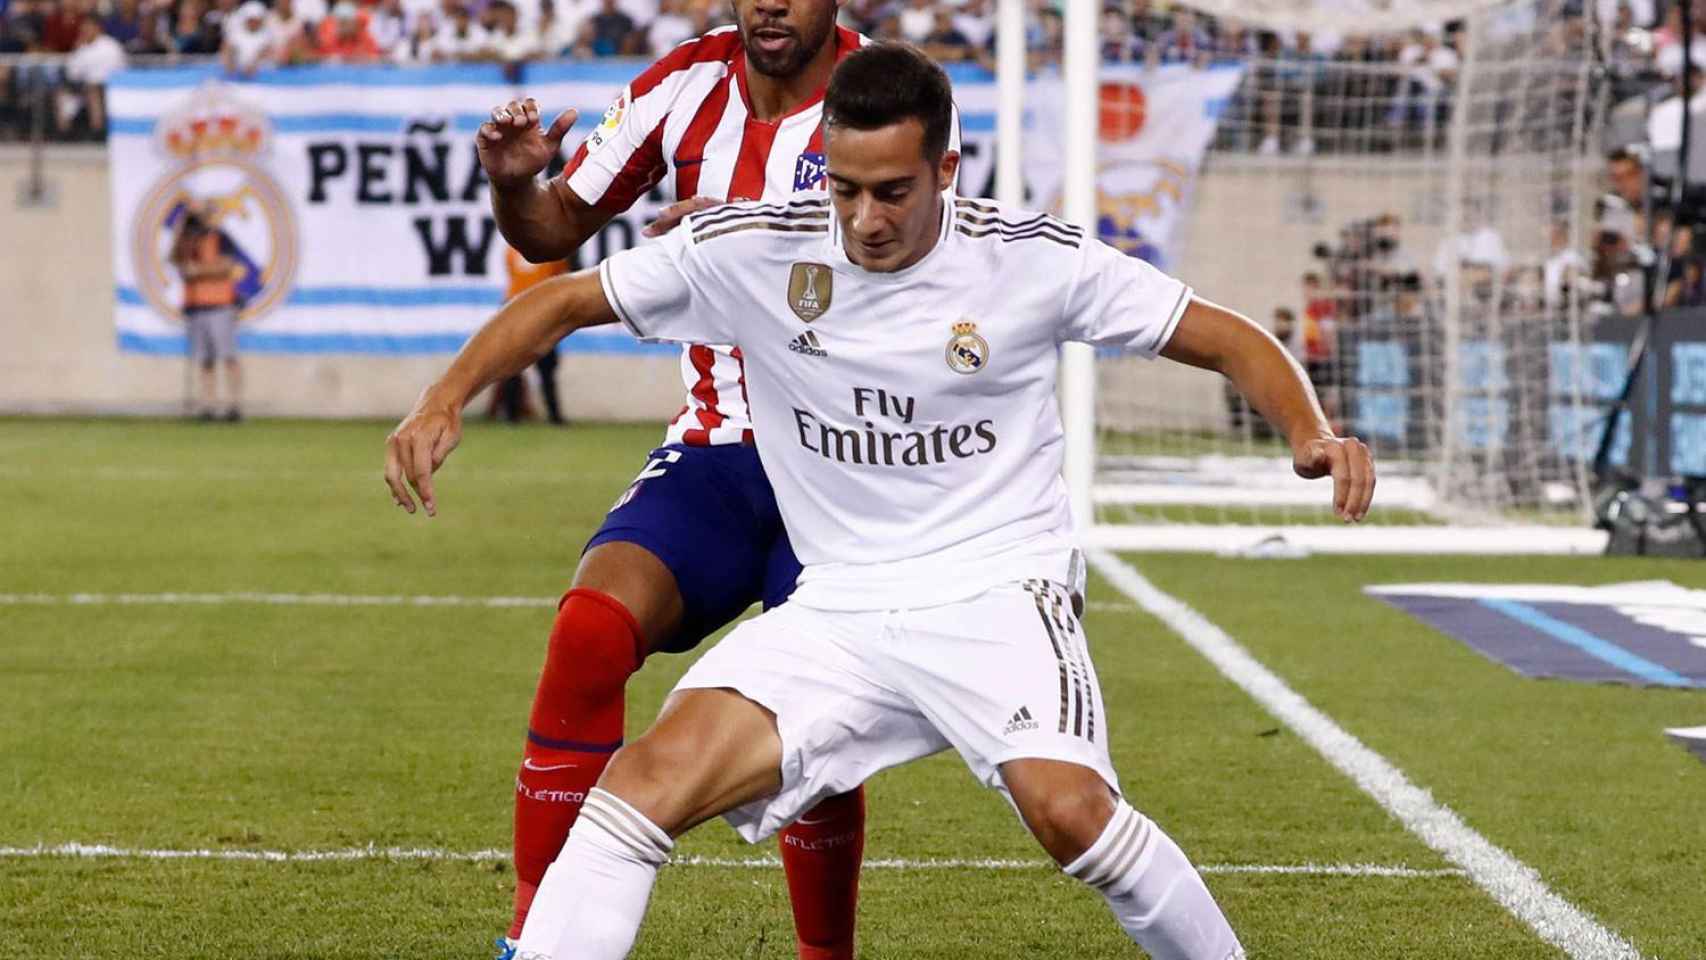 Lucas Vázquez protege el balón de un jugador del Atlético